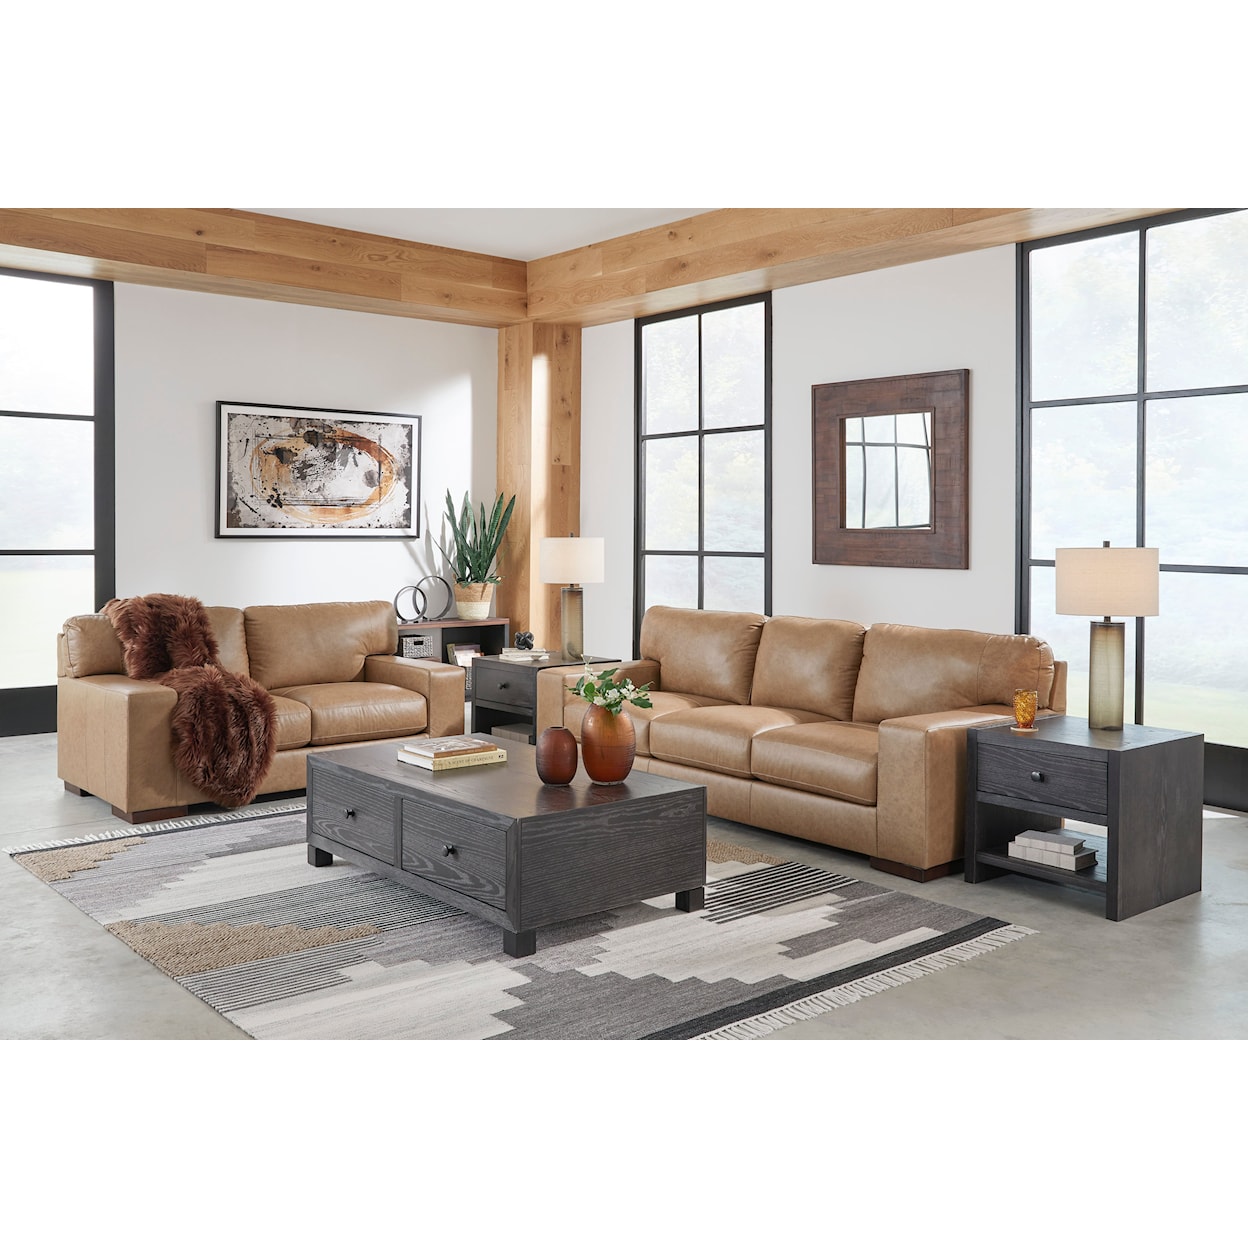 Benchcraft Lombardia Living Room Set